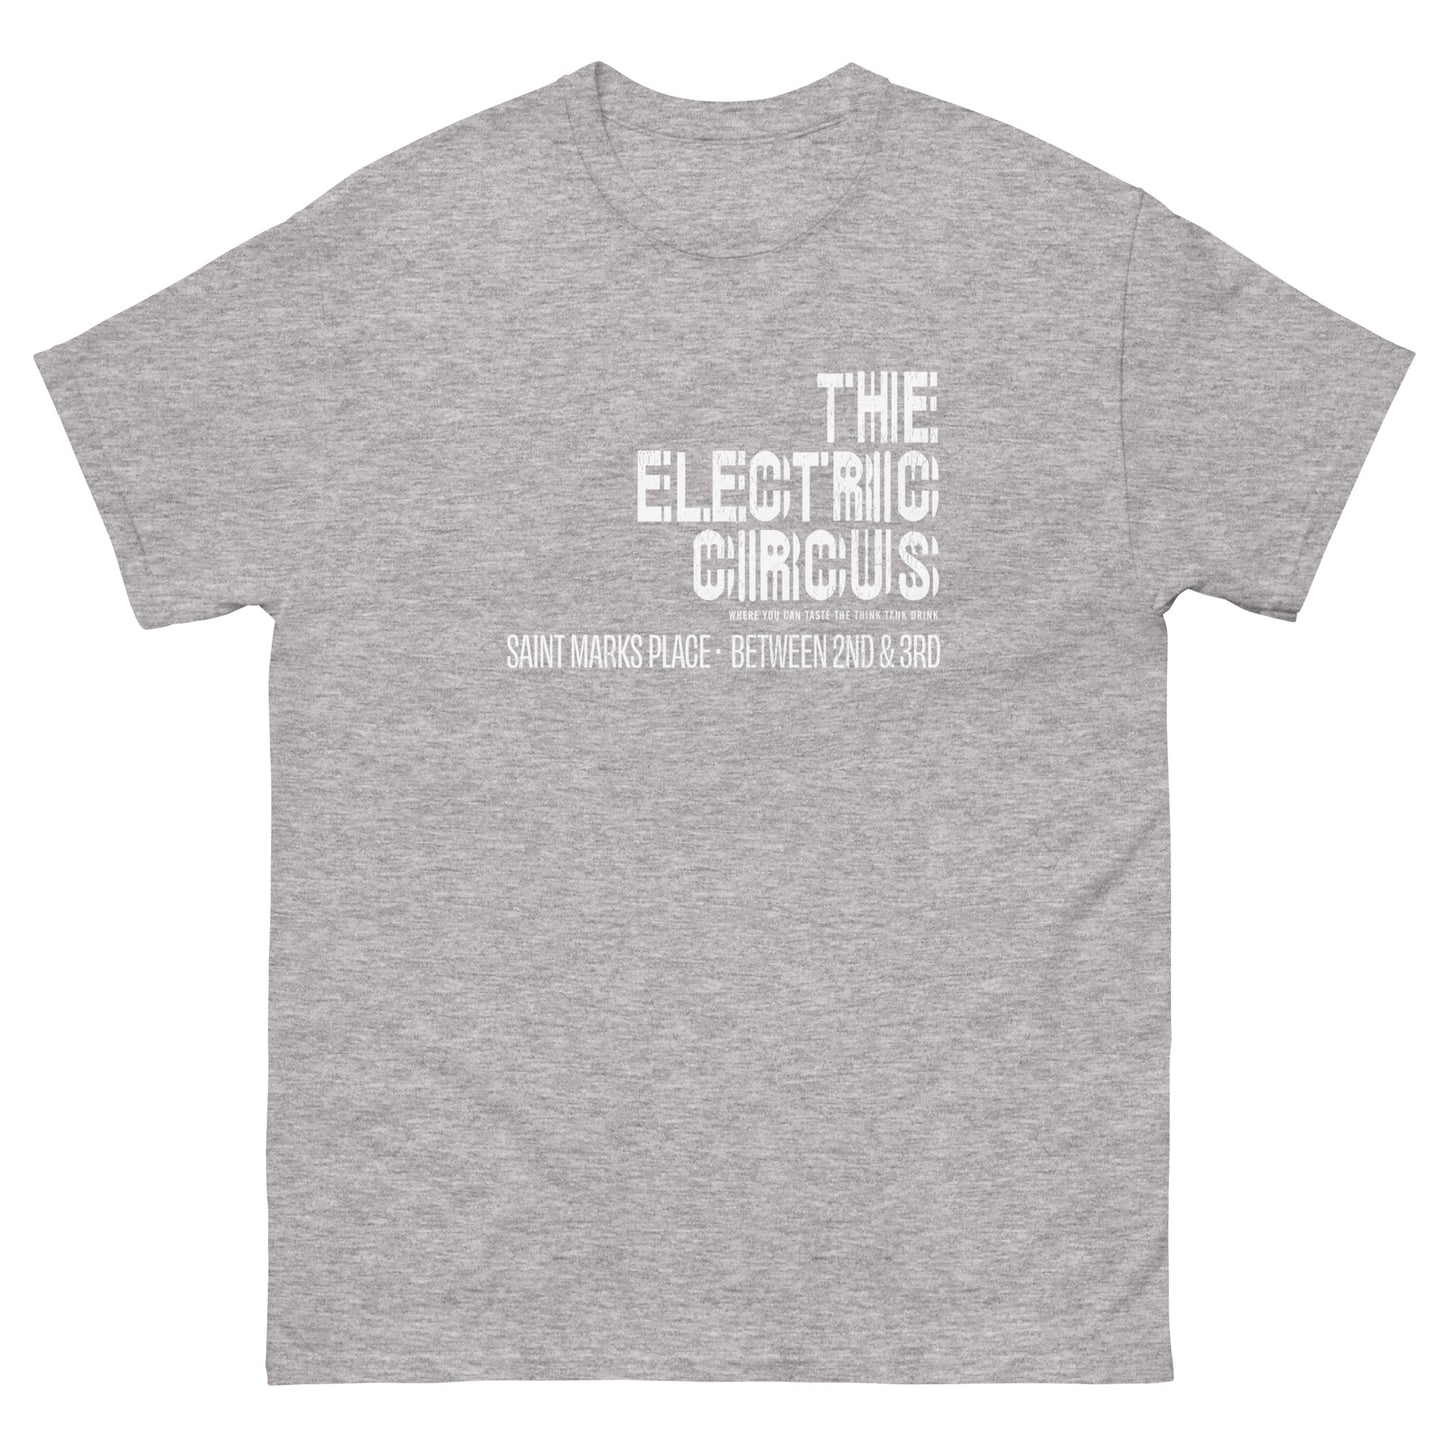 The Electric Circus Standard T-Shirt - Standard